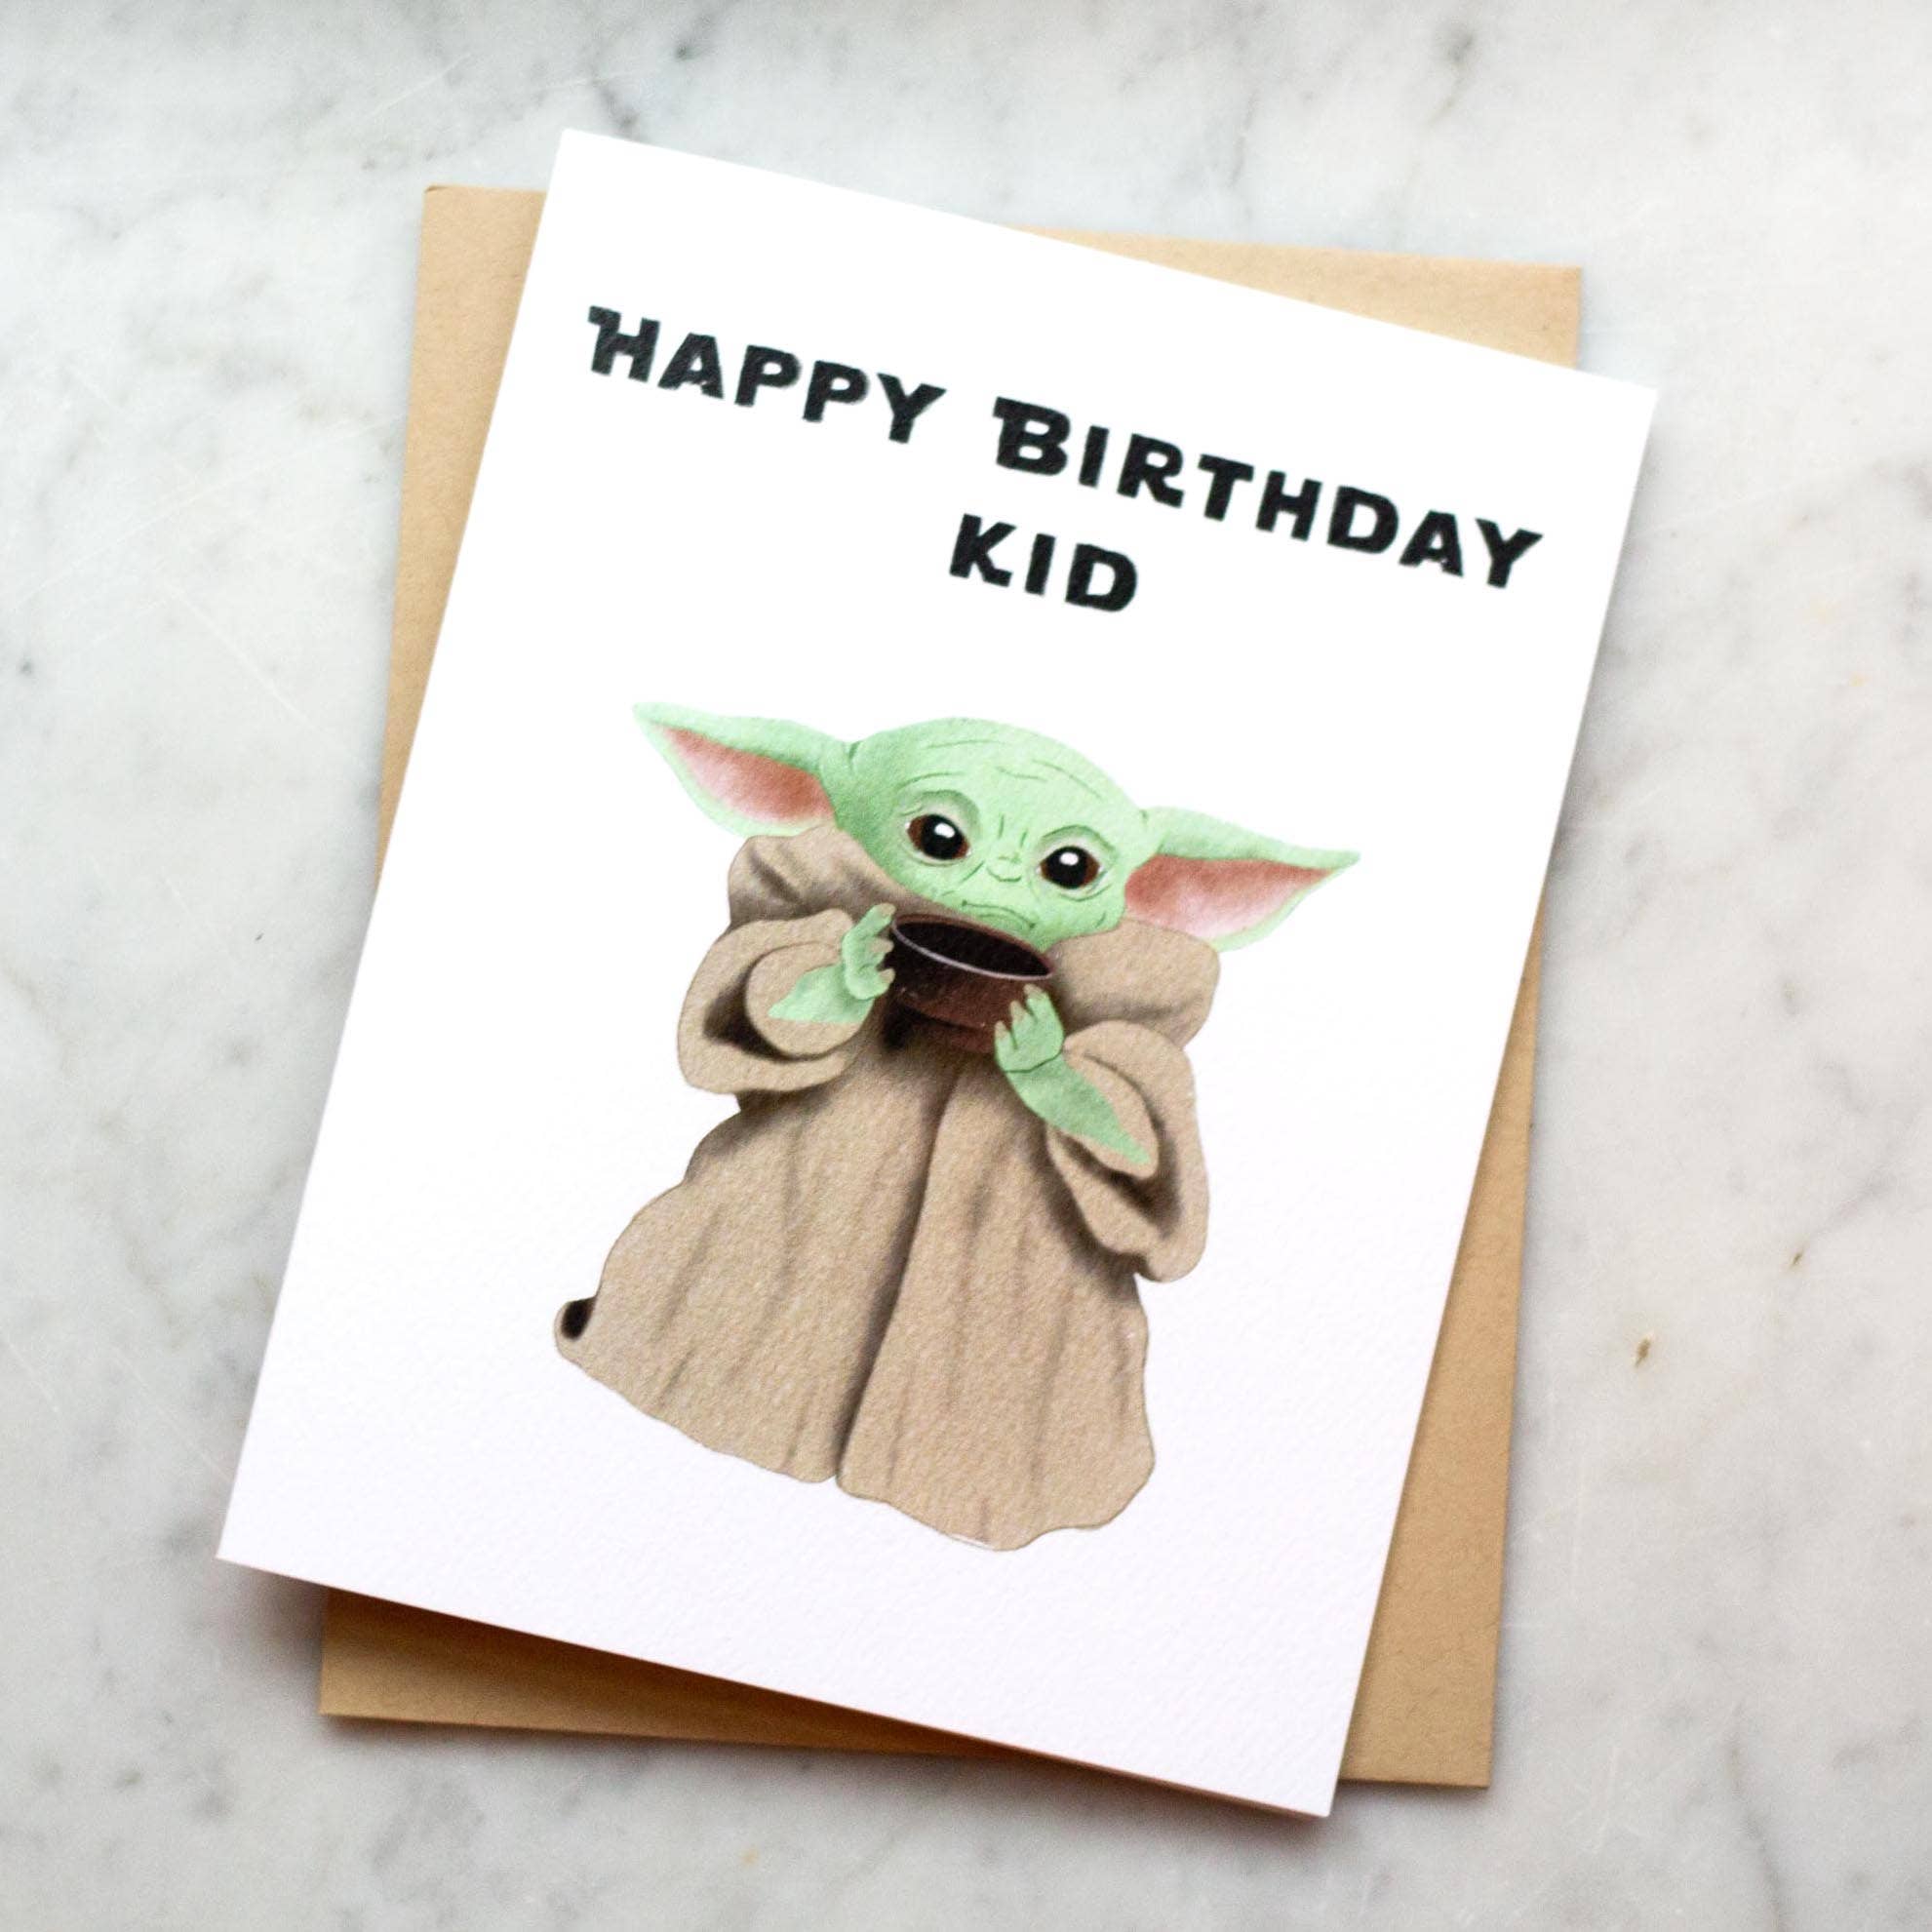 Happy Birthday Kid Card